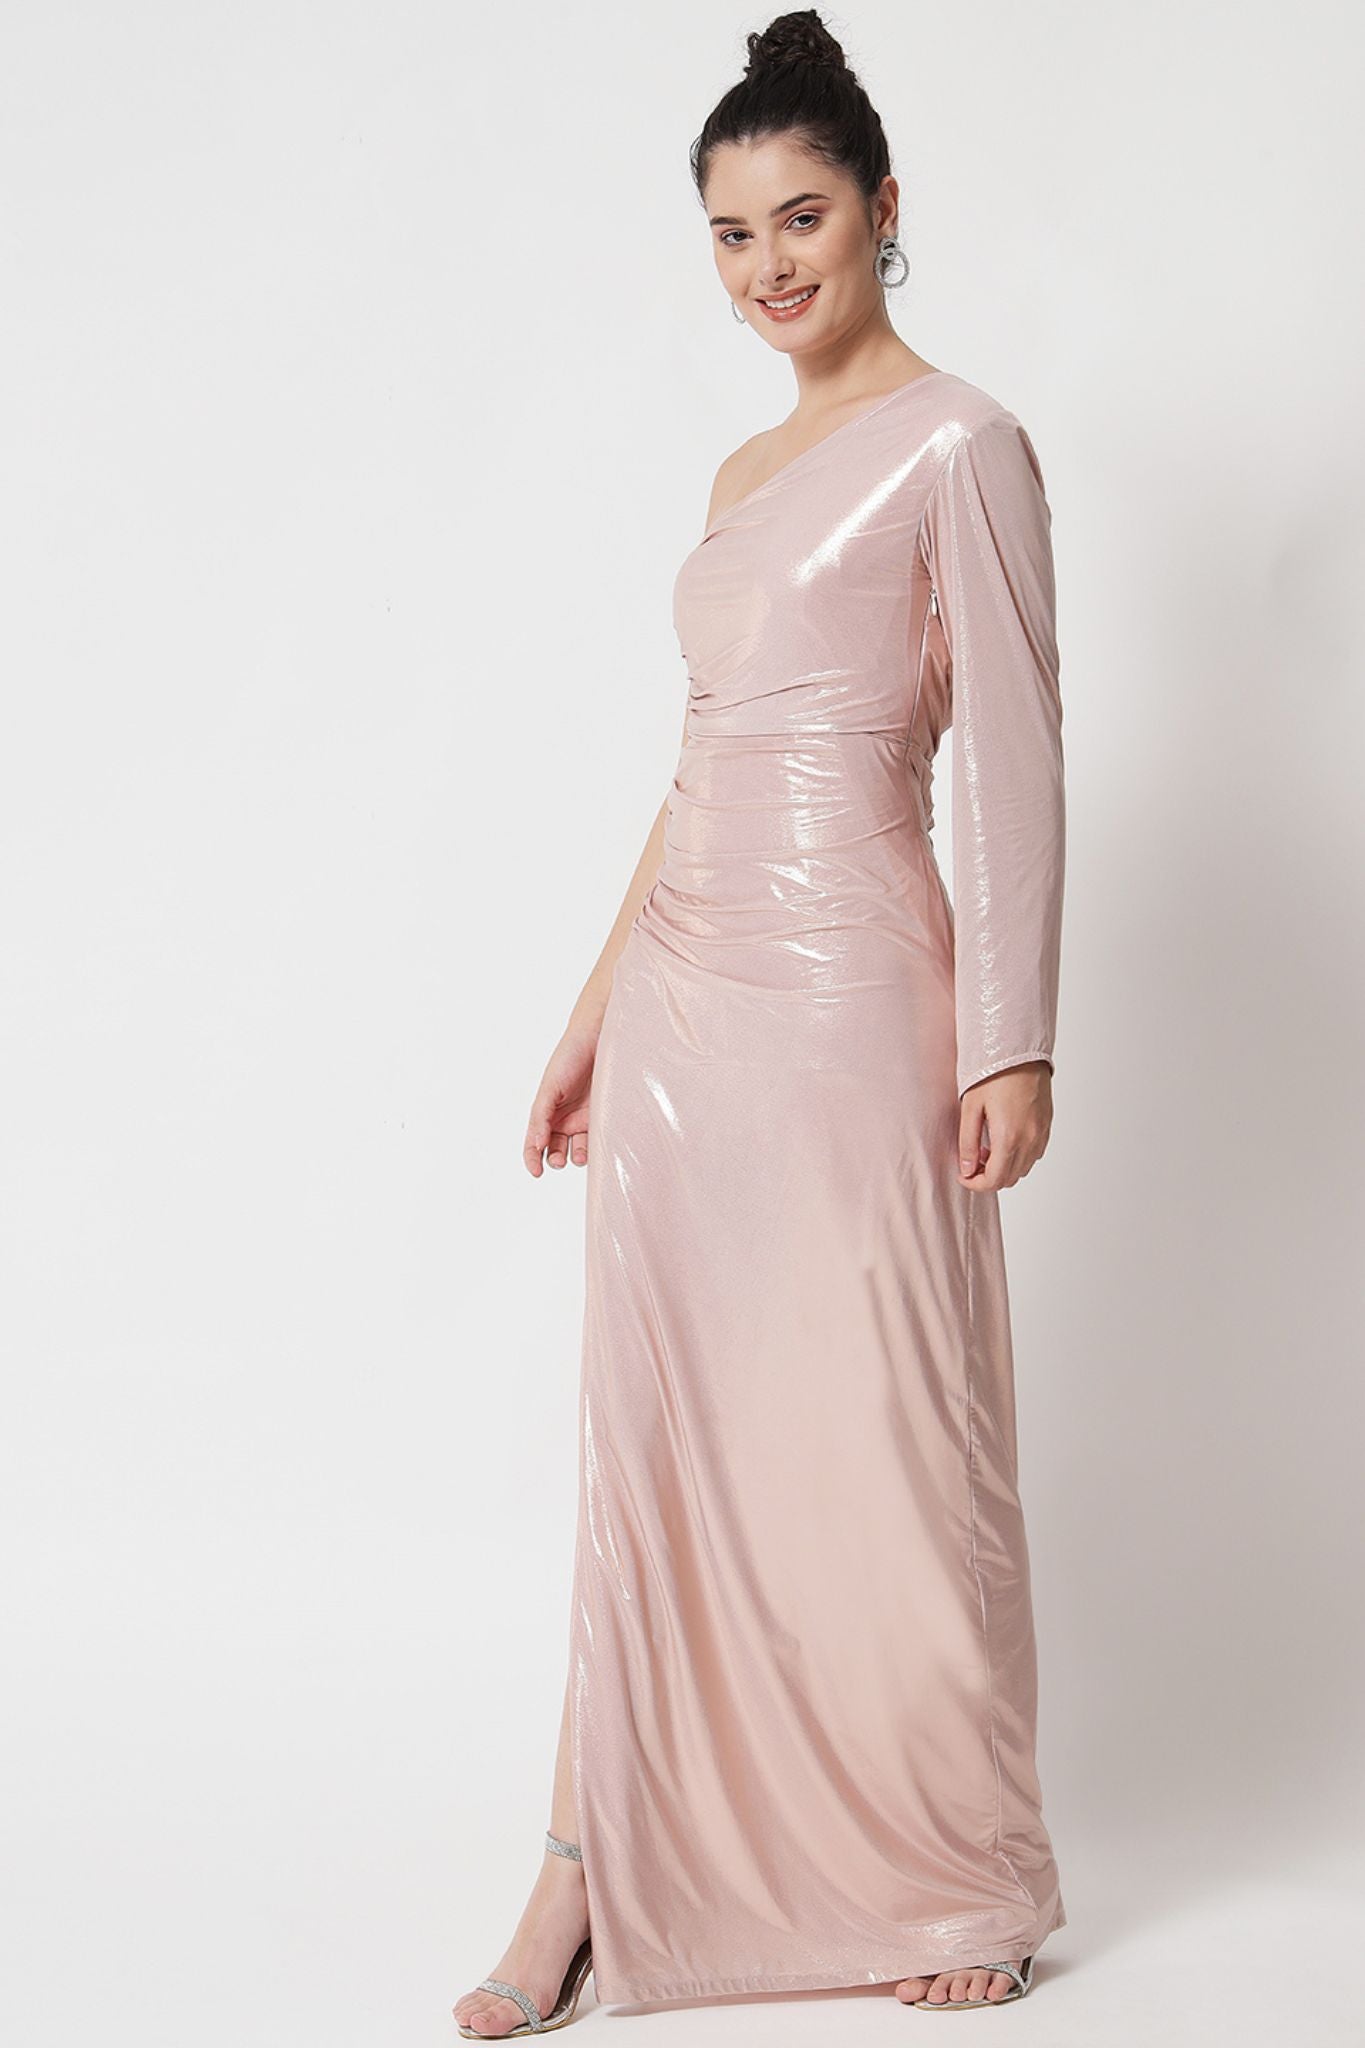 Sleep Beauty Cinderella Princess Pink Dress Cosplay Costume Fancy Dress @ |  eBay